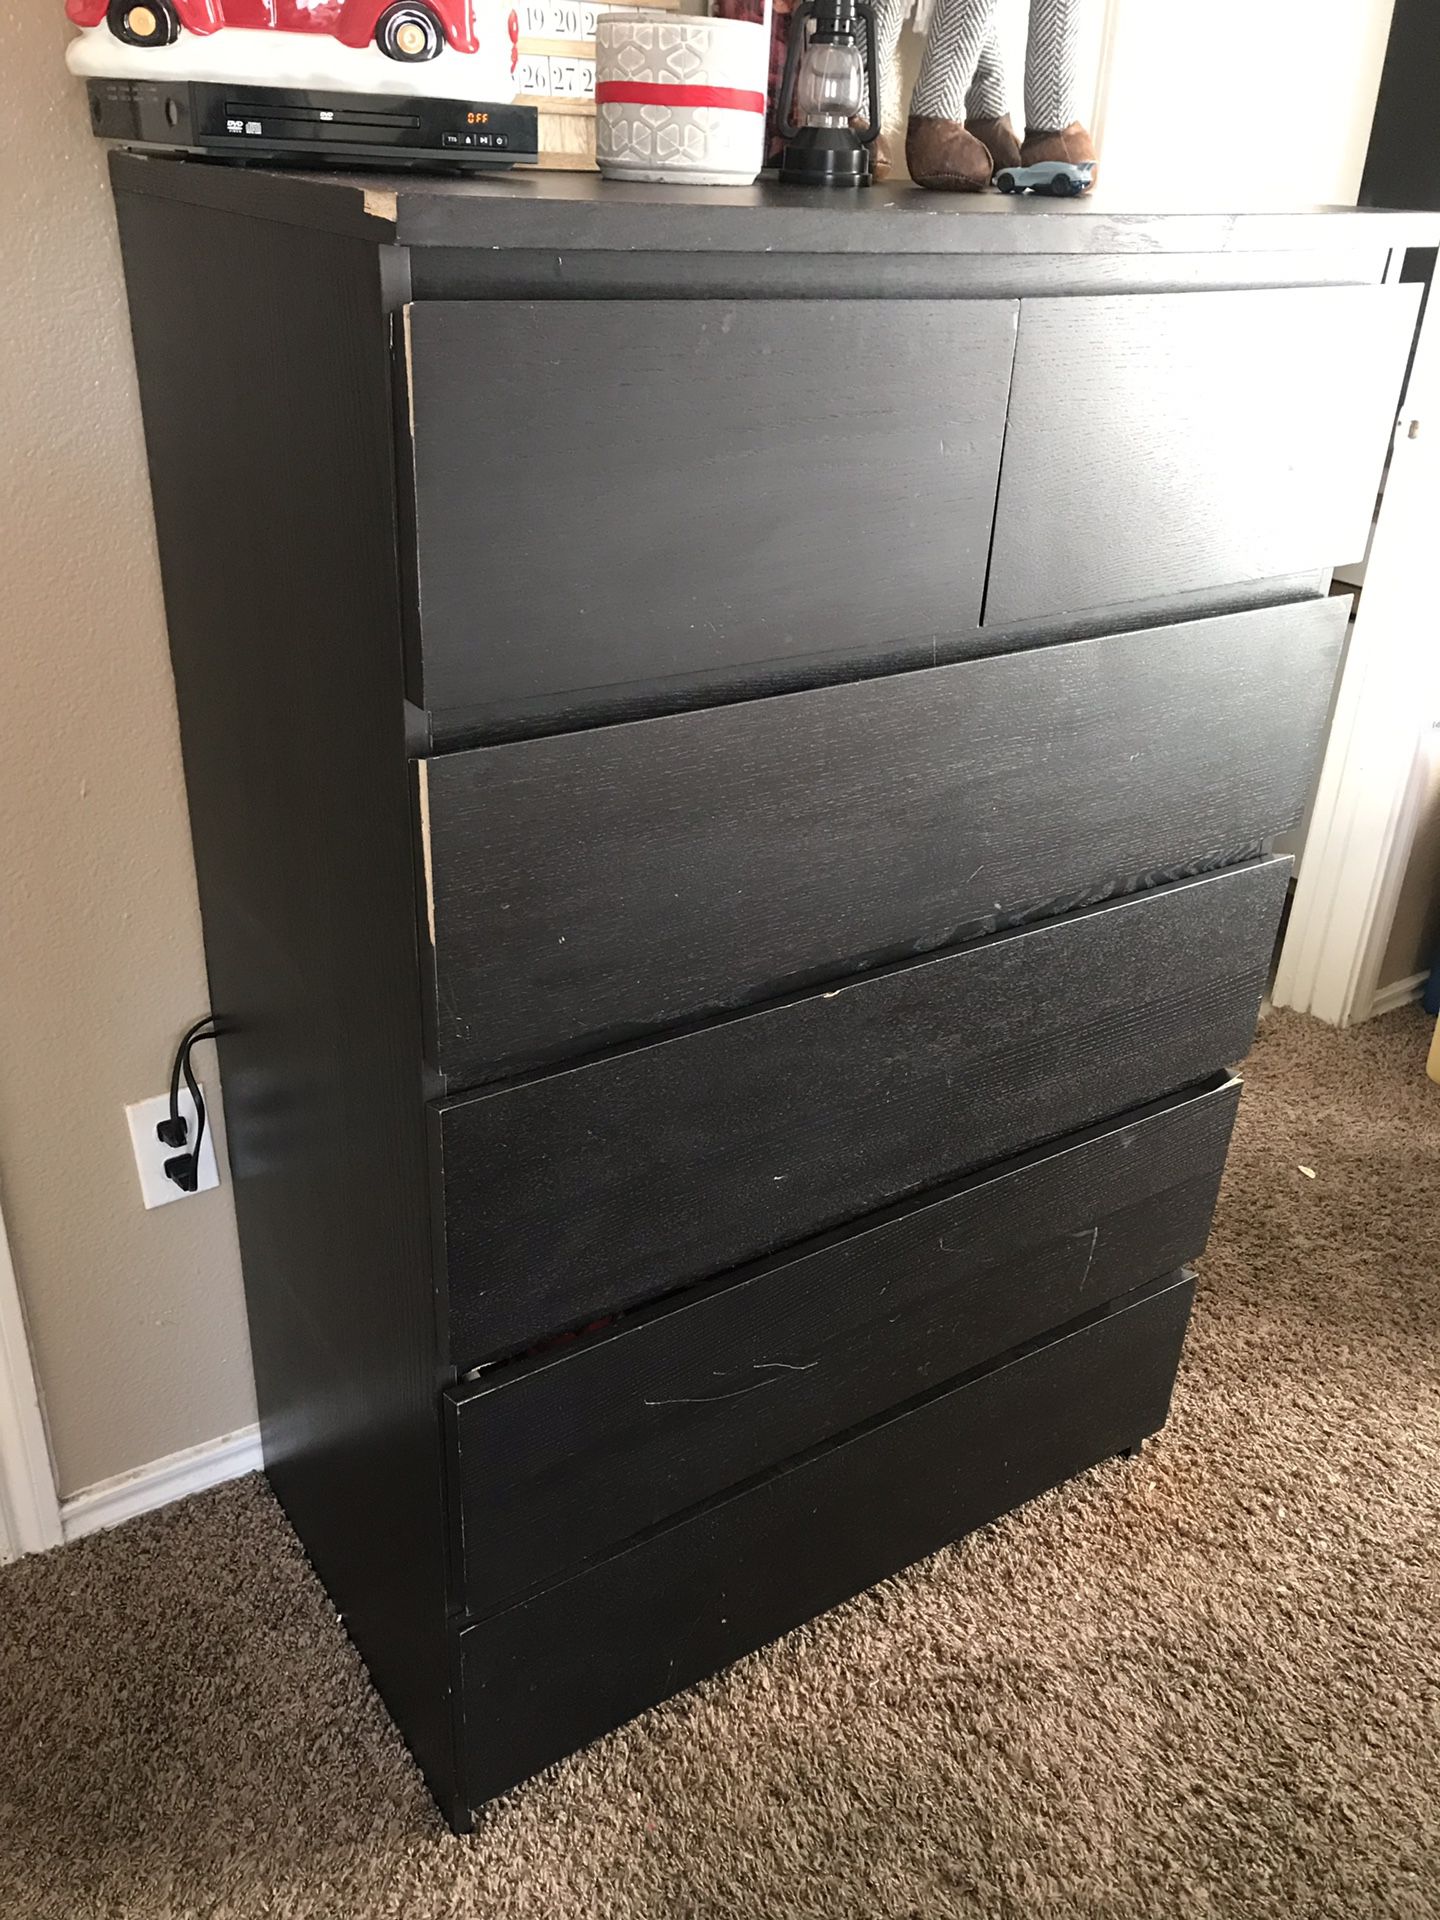 6 drawers dresser